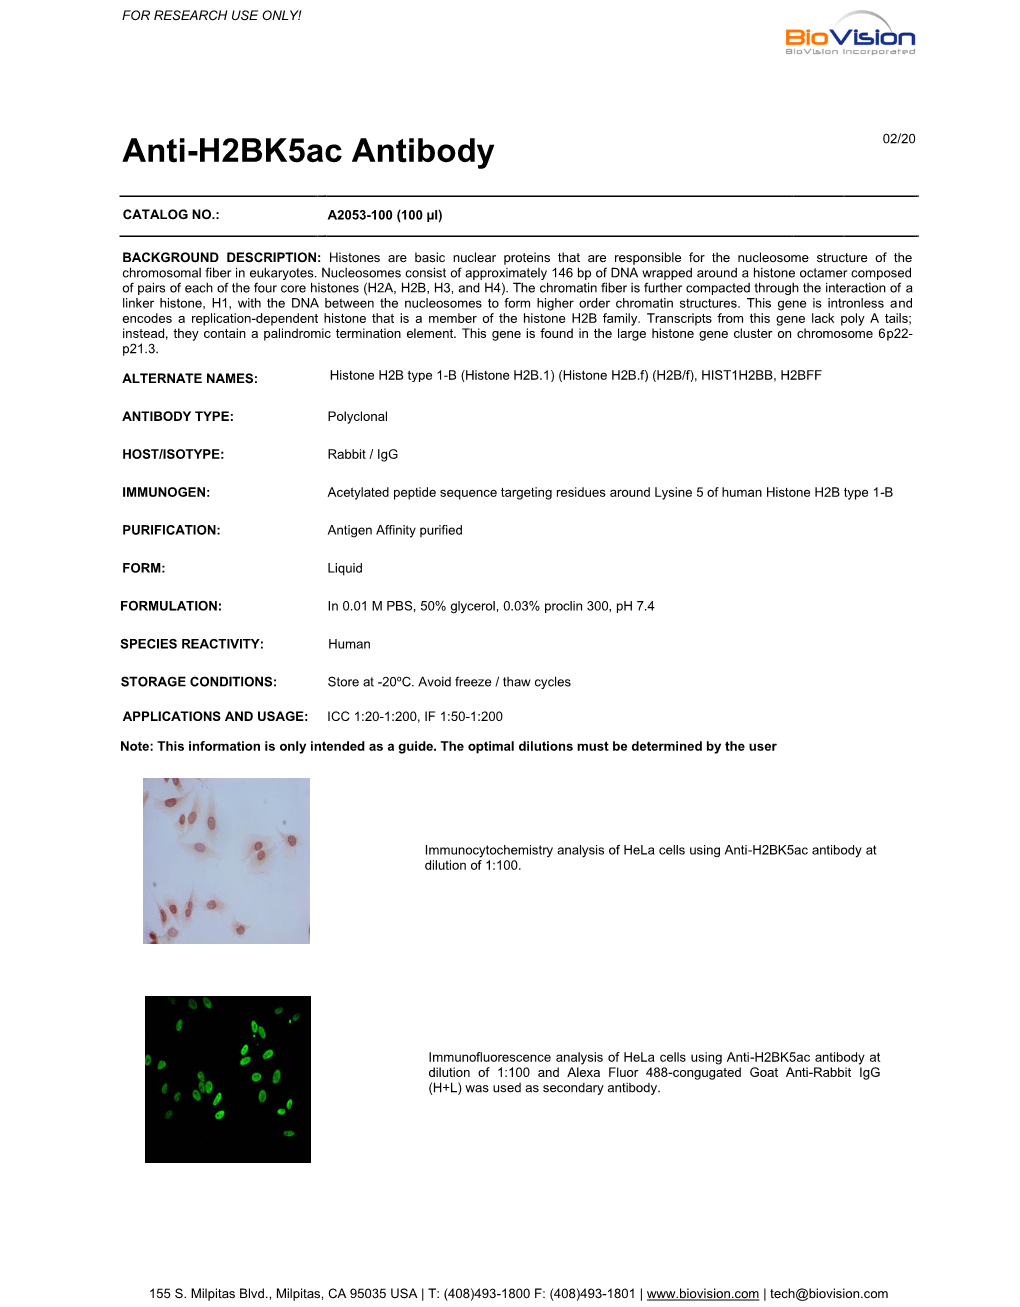 Anti-H2bk5ac Antibody